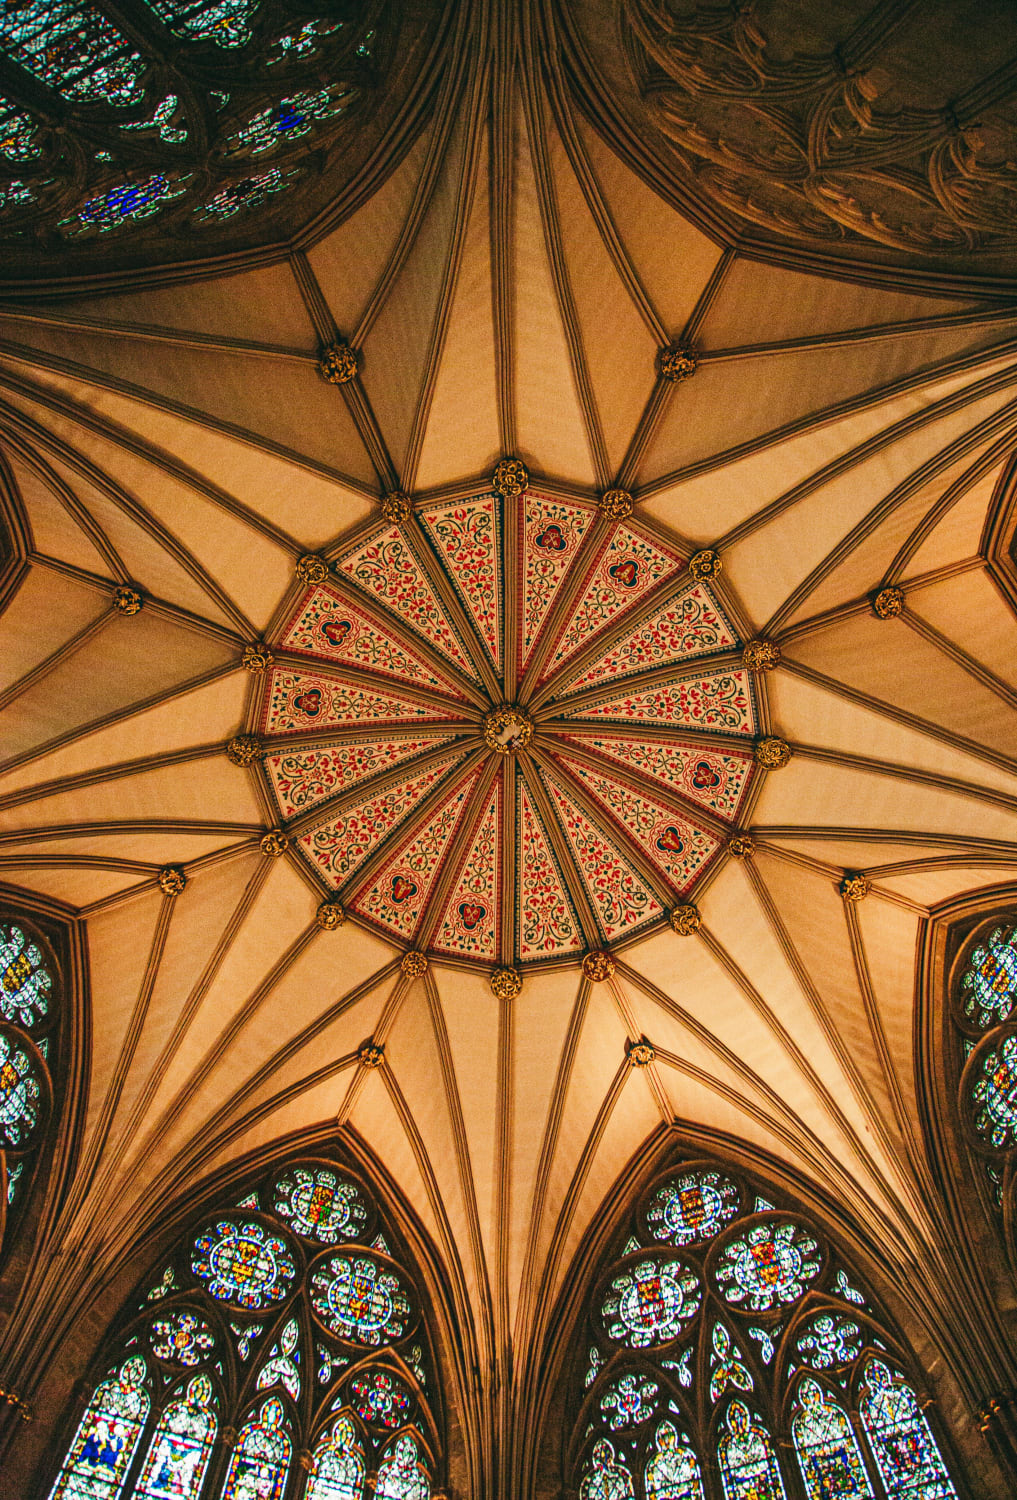 York Minster Ceiling. York, England.